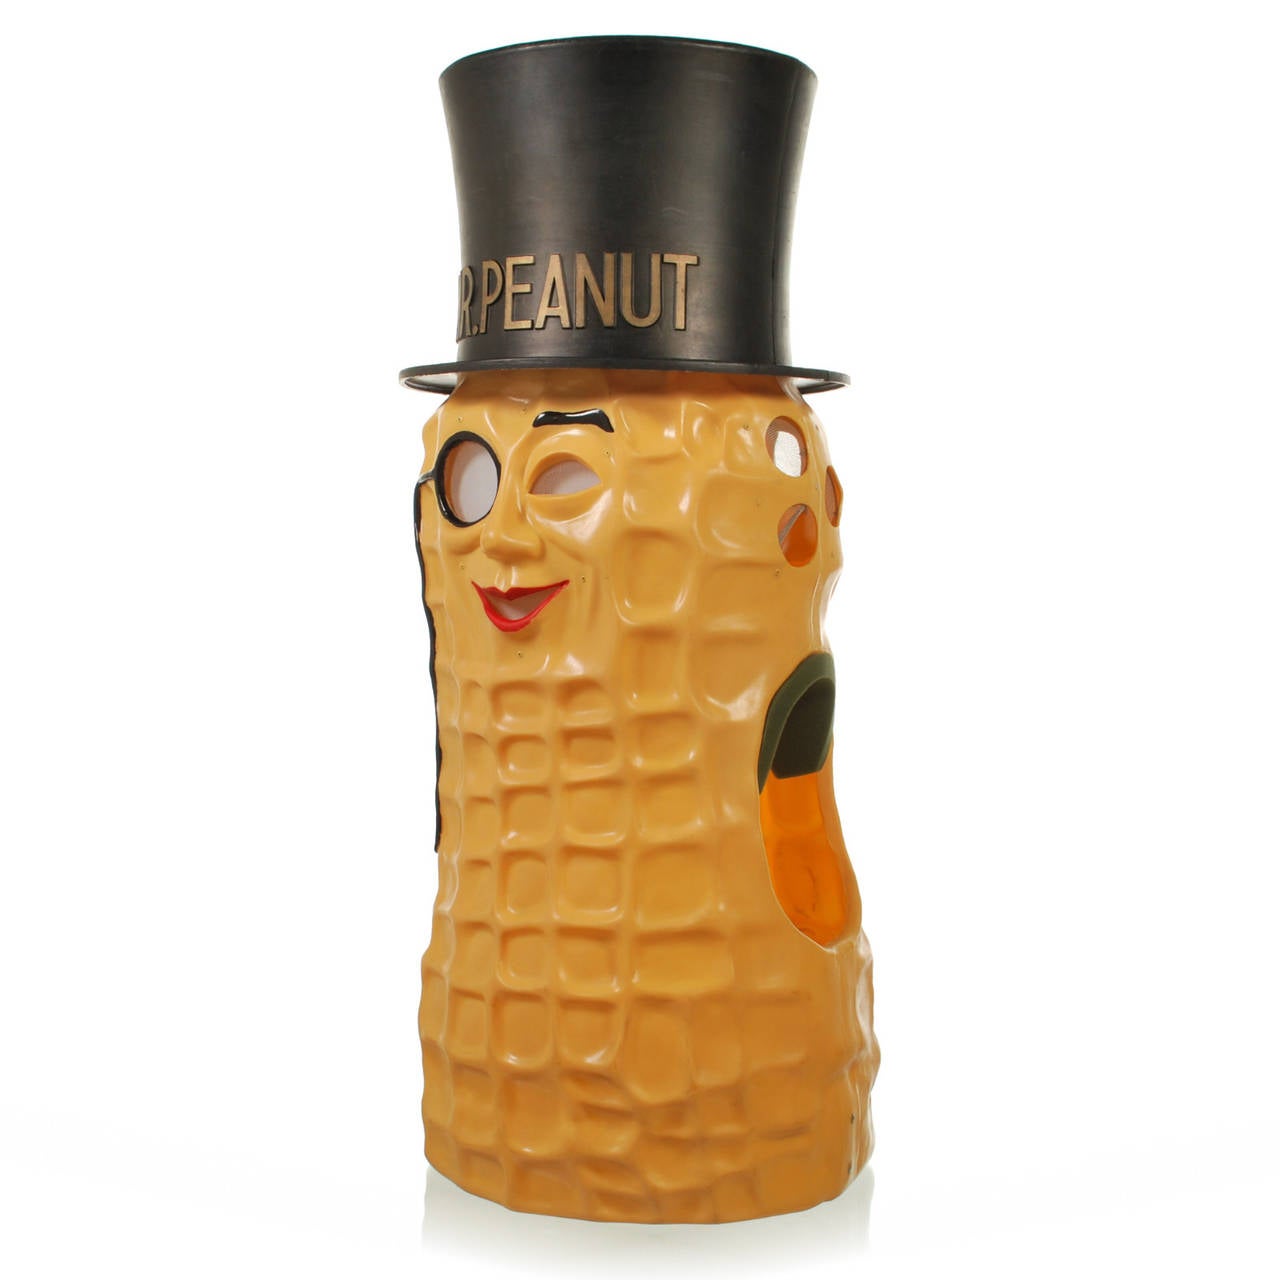 Vintage Mr. Peanut Promotional Outfit Costume at 1stdibs